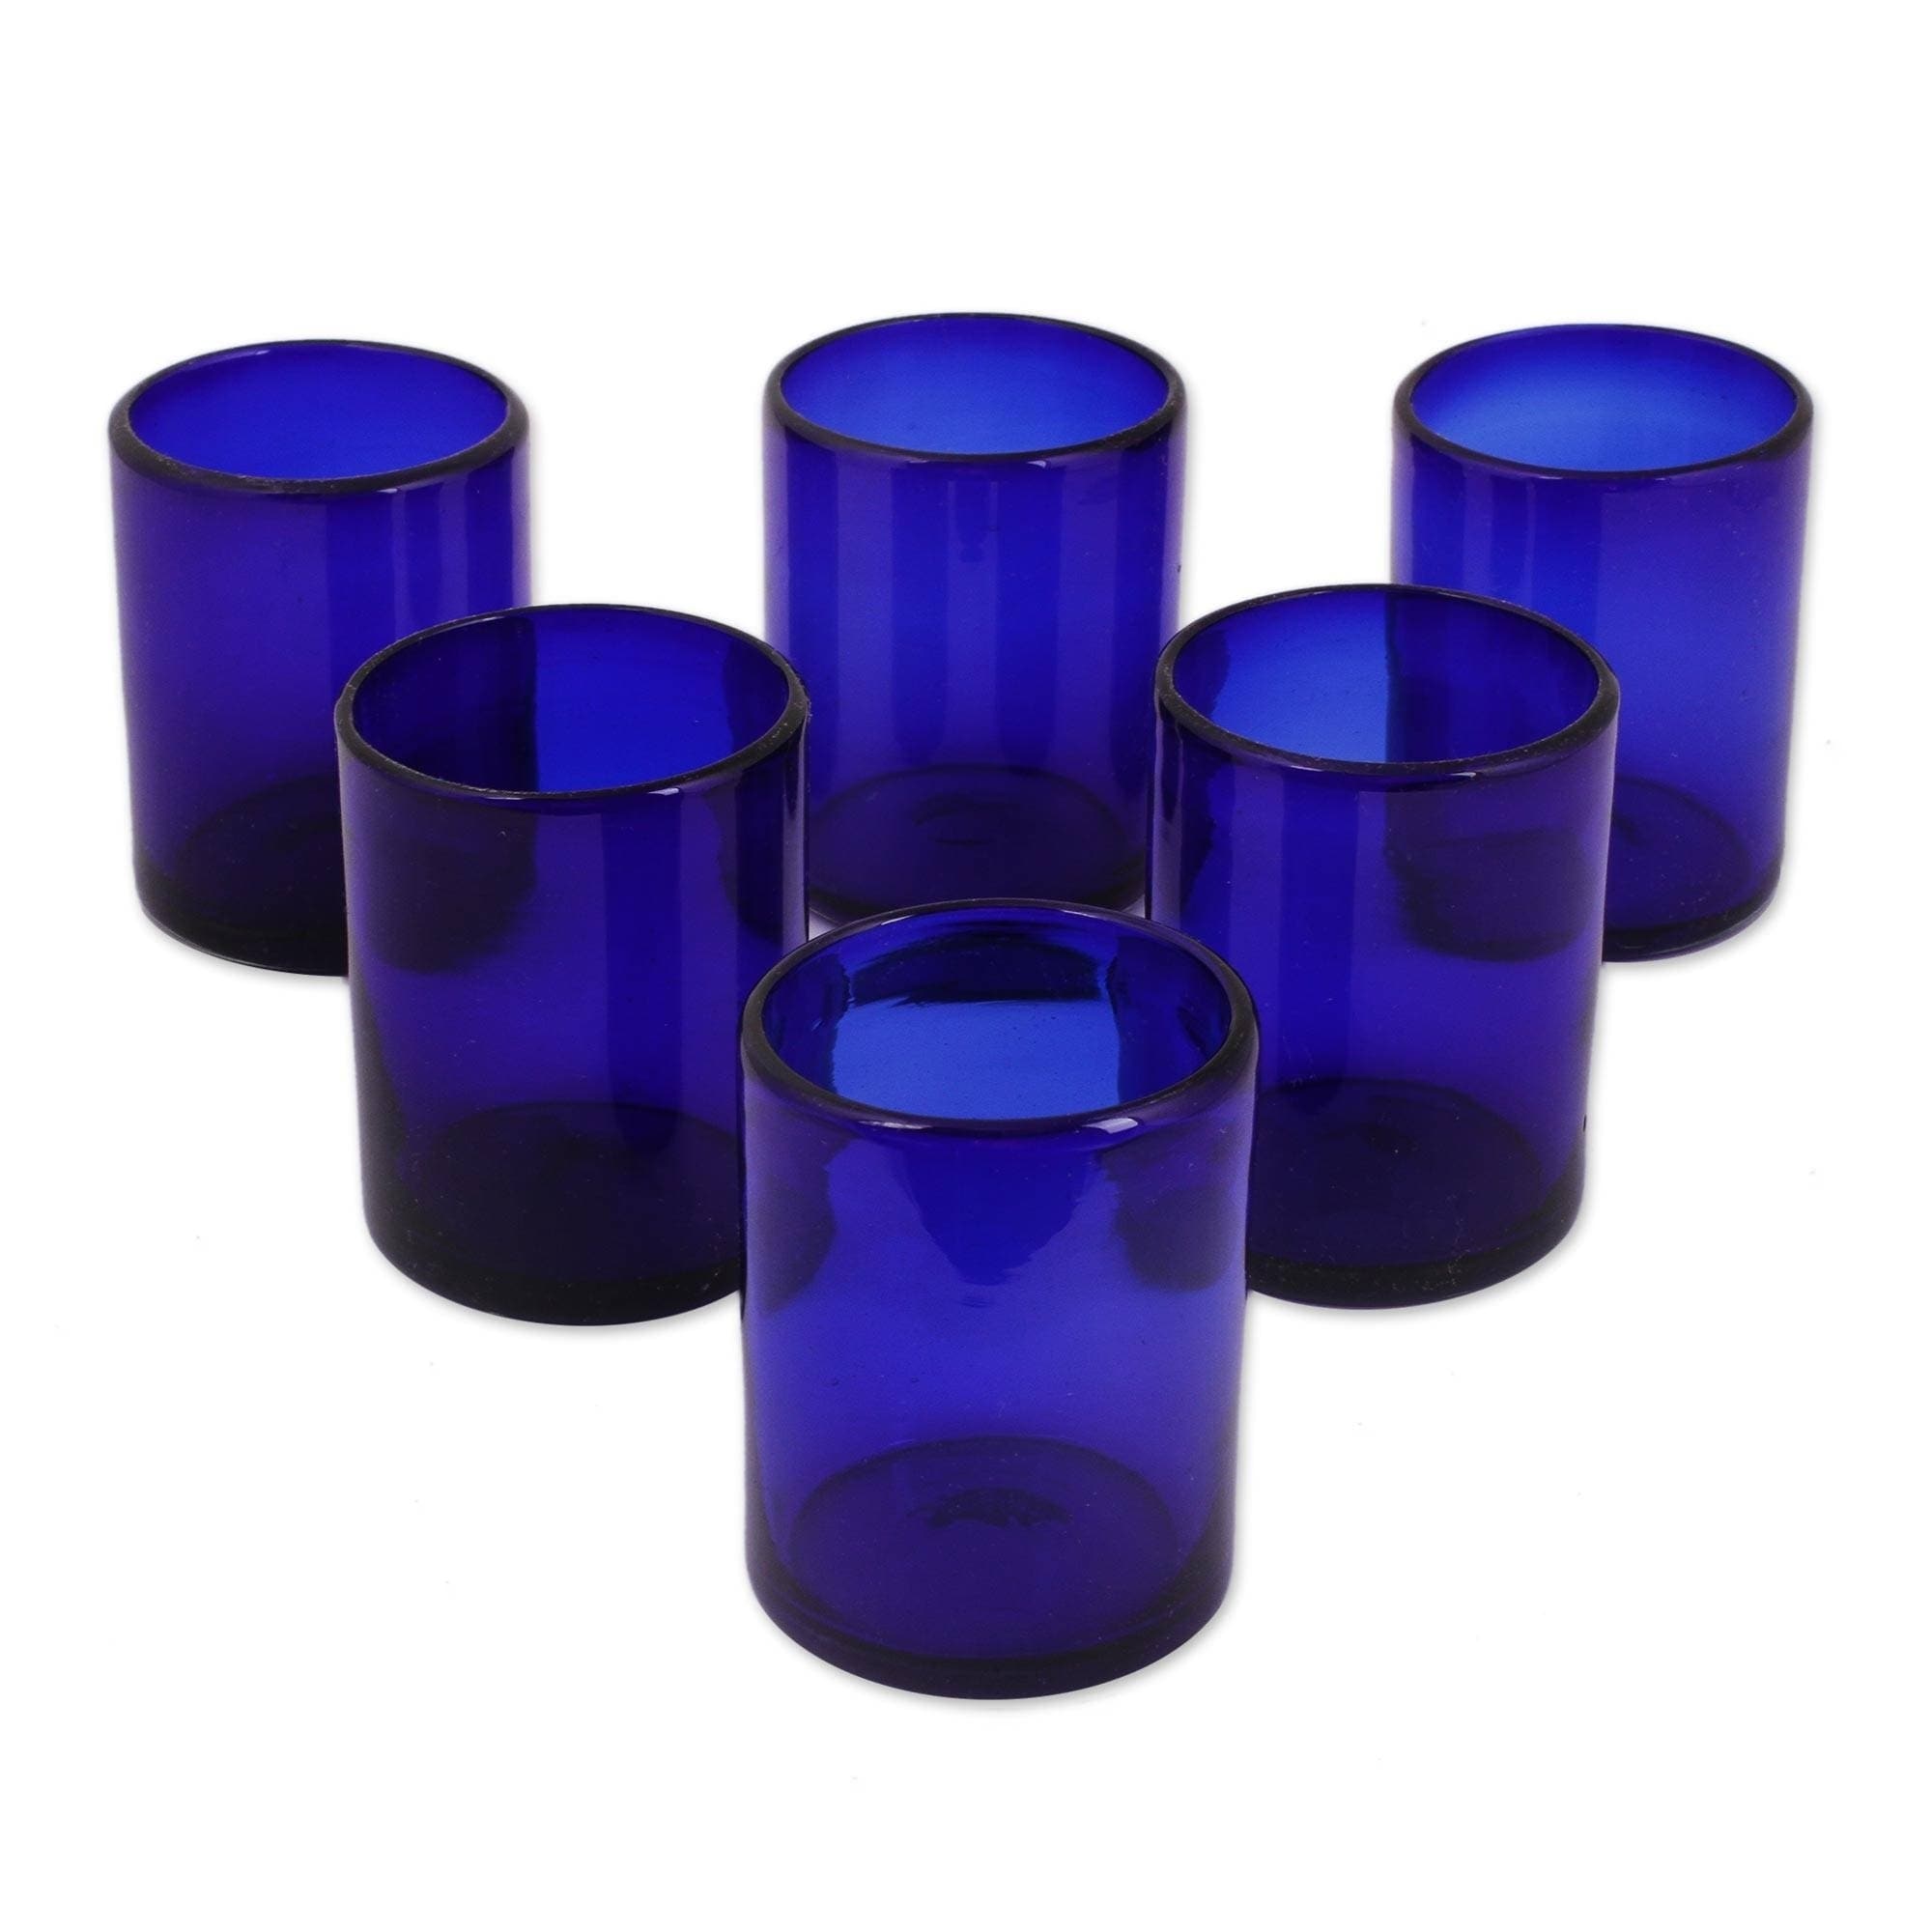 Blue Drinking Glasses Elegant Home Design Ideas From Interior Decorators